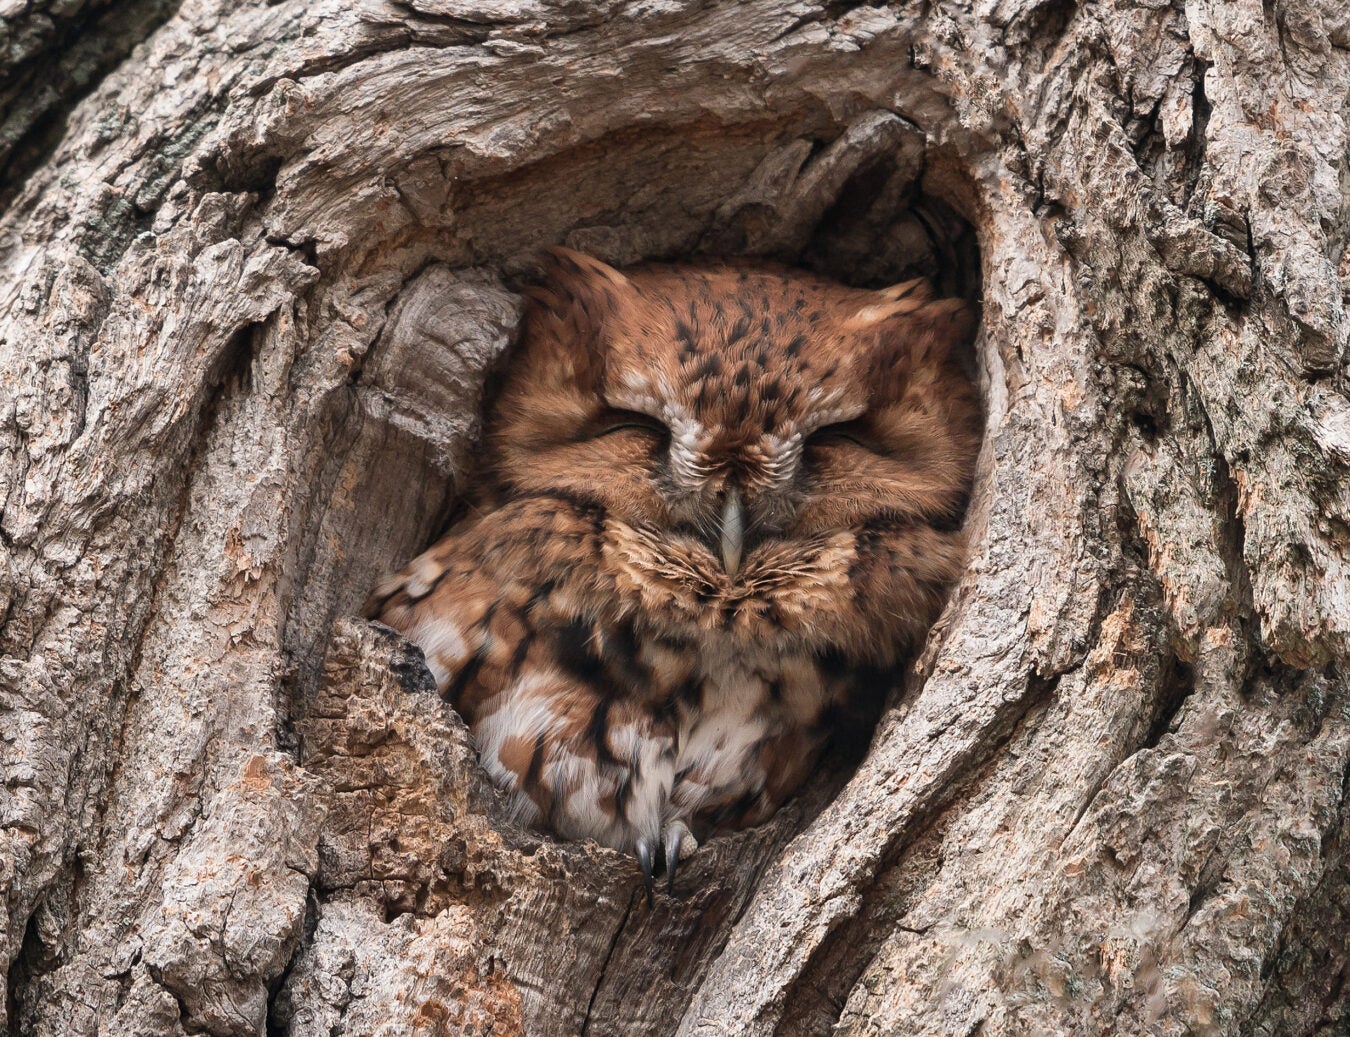 An owl sleeping in a nook